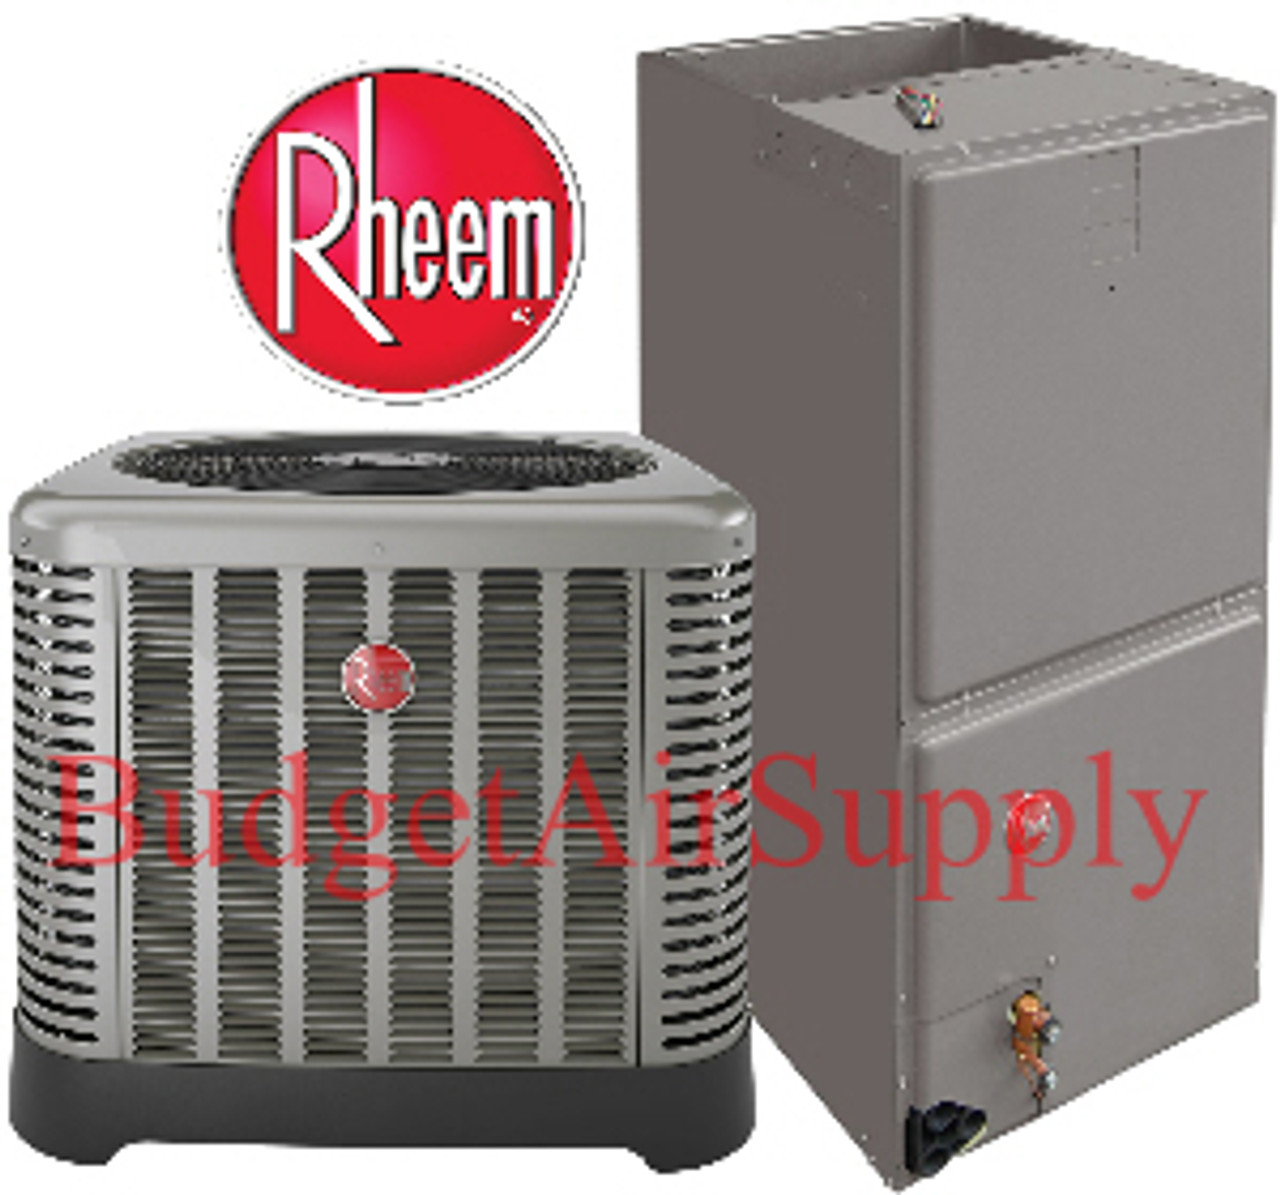 Rheem Ruud Rp1342ad1na 3 12 Ton Split System Heat Pump 13 Seer 3 Phase